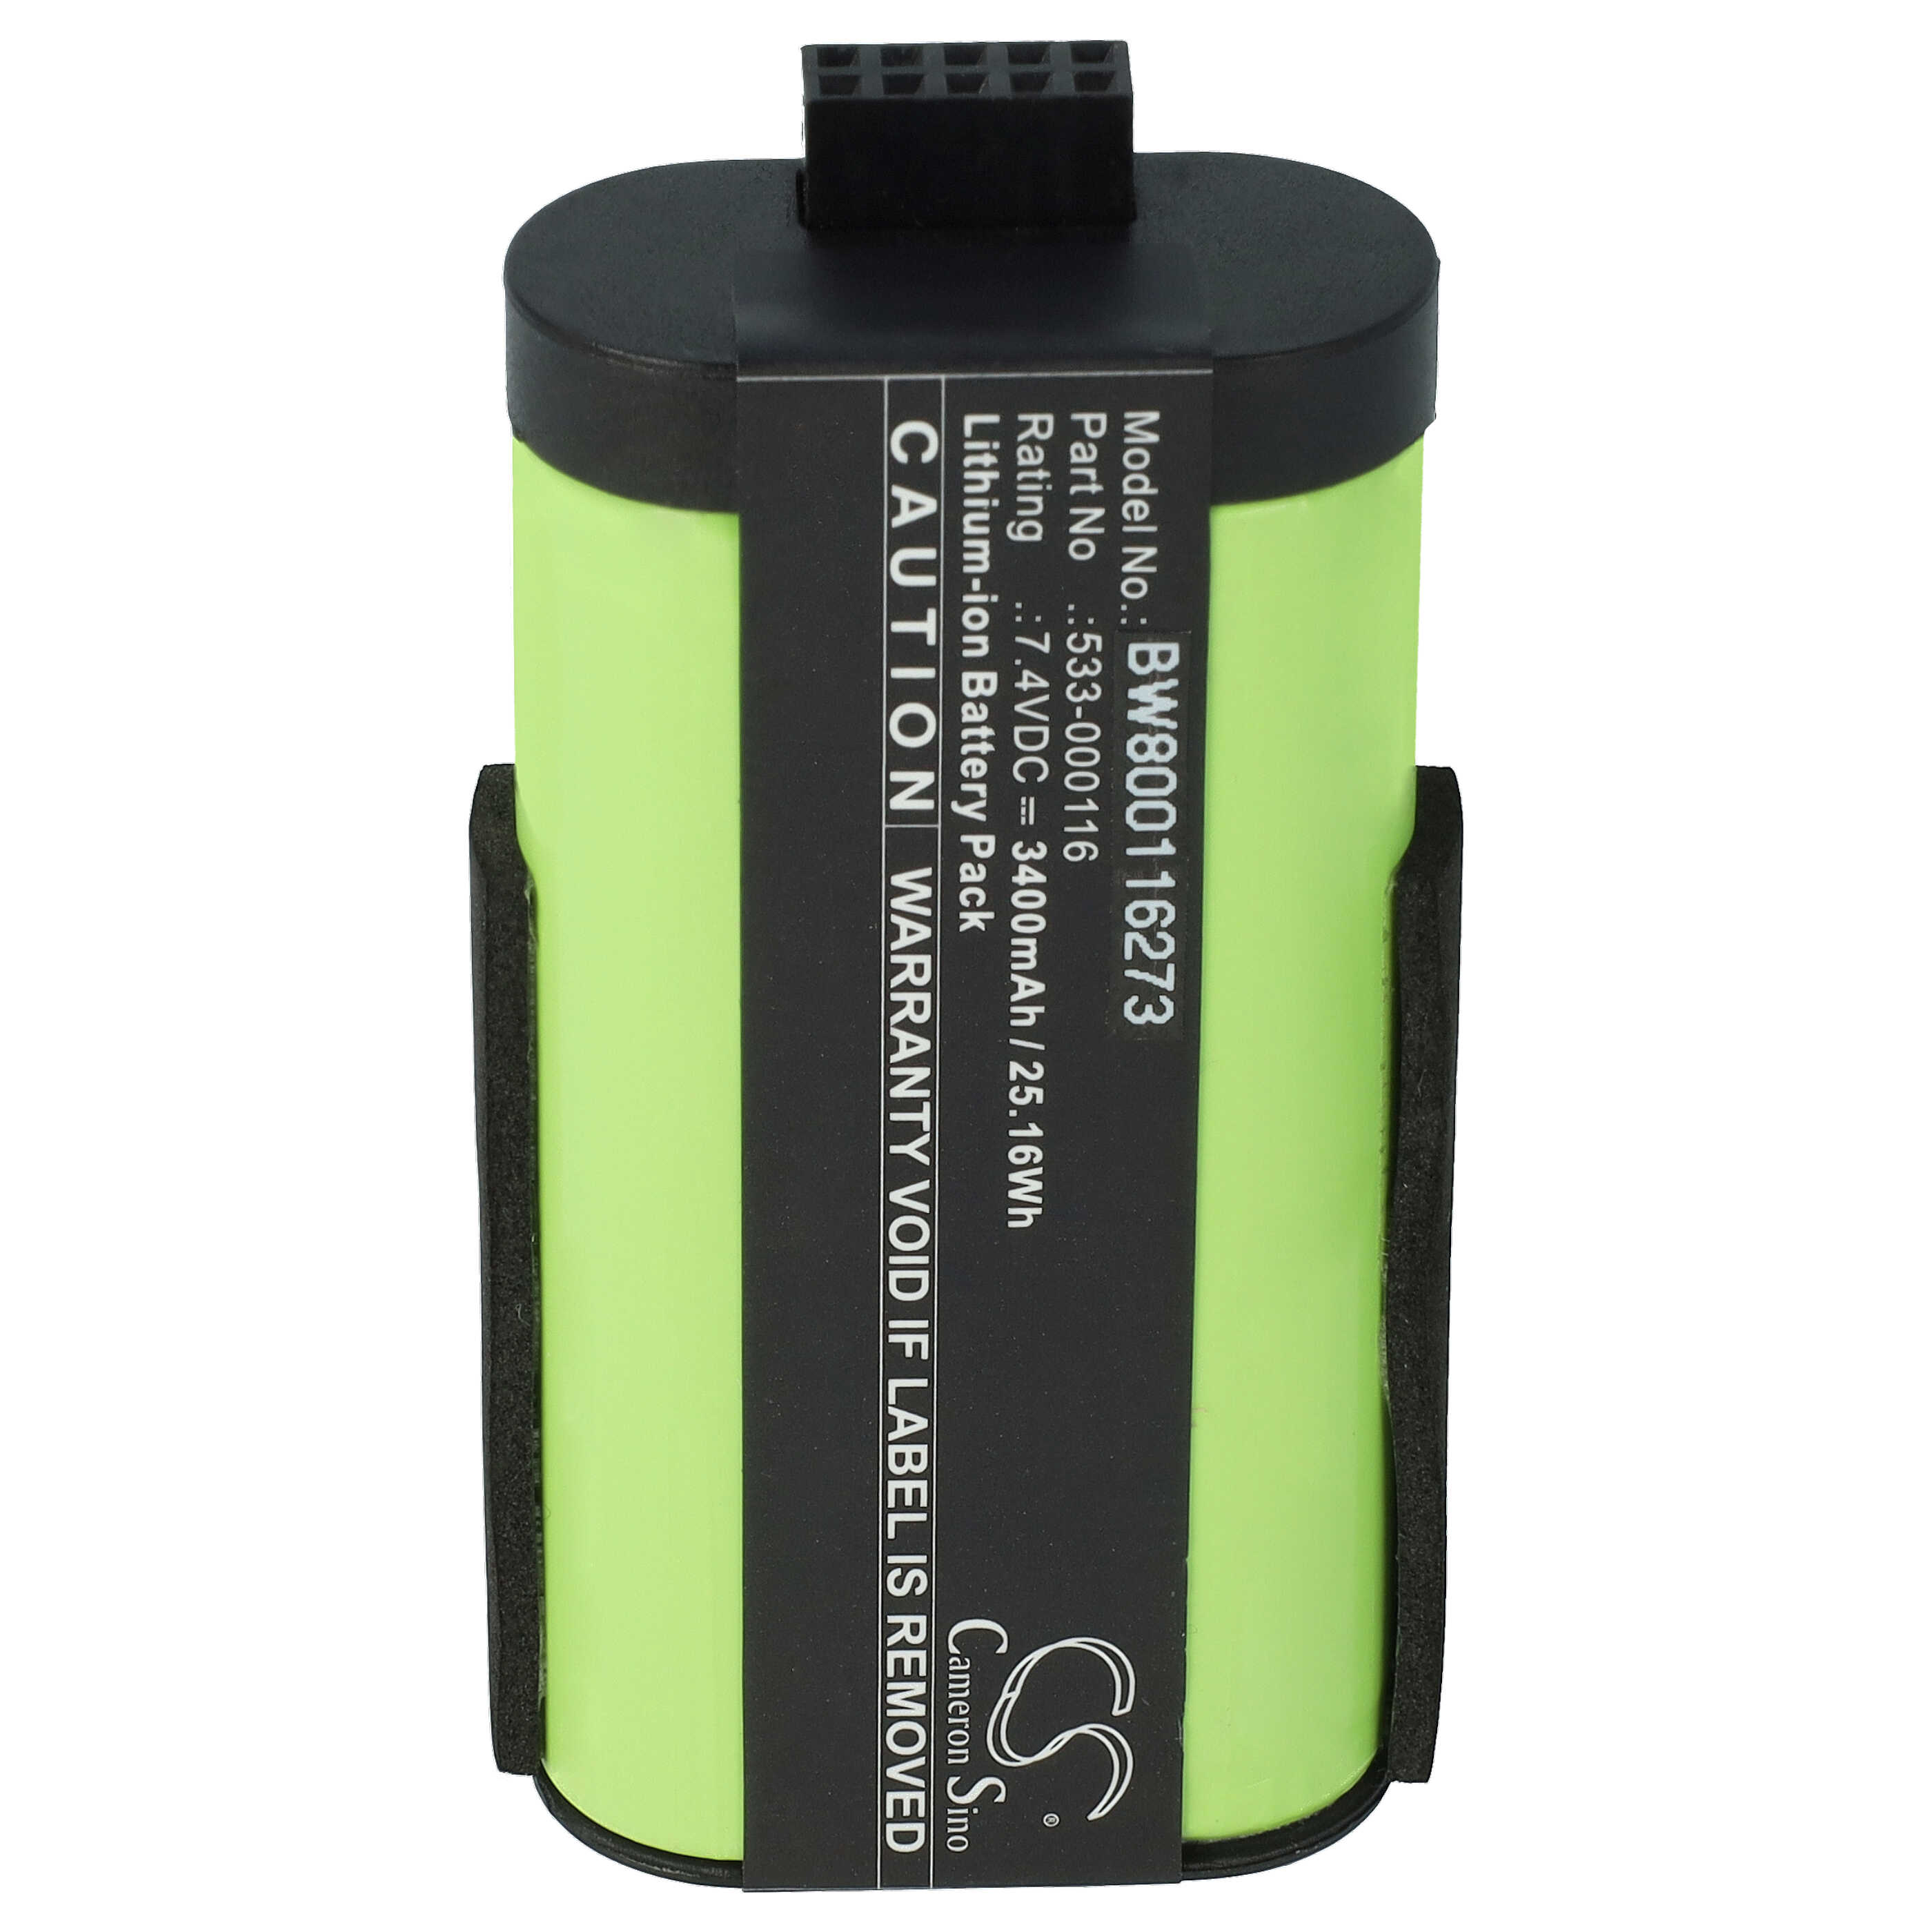 Batería reemplaza Logitech 533-000116, 533-000138 para altavoces Logitech - 3400 mAh 7,4 V Li-Ion